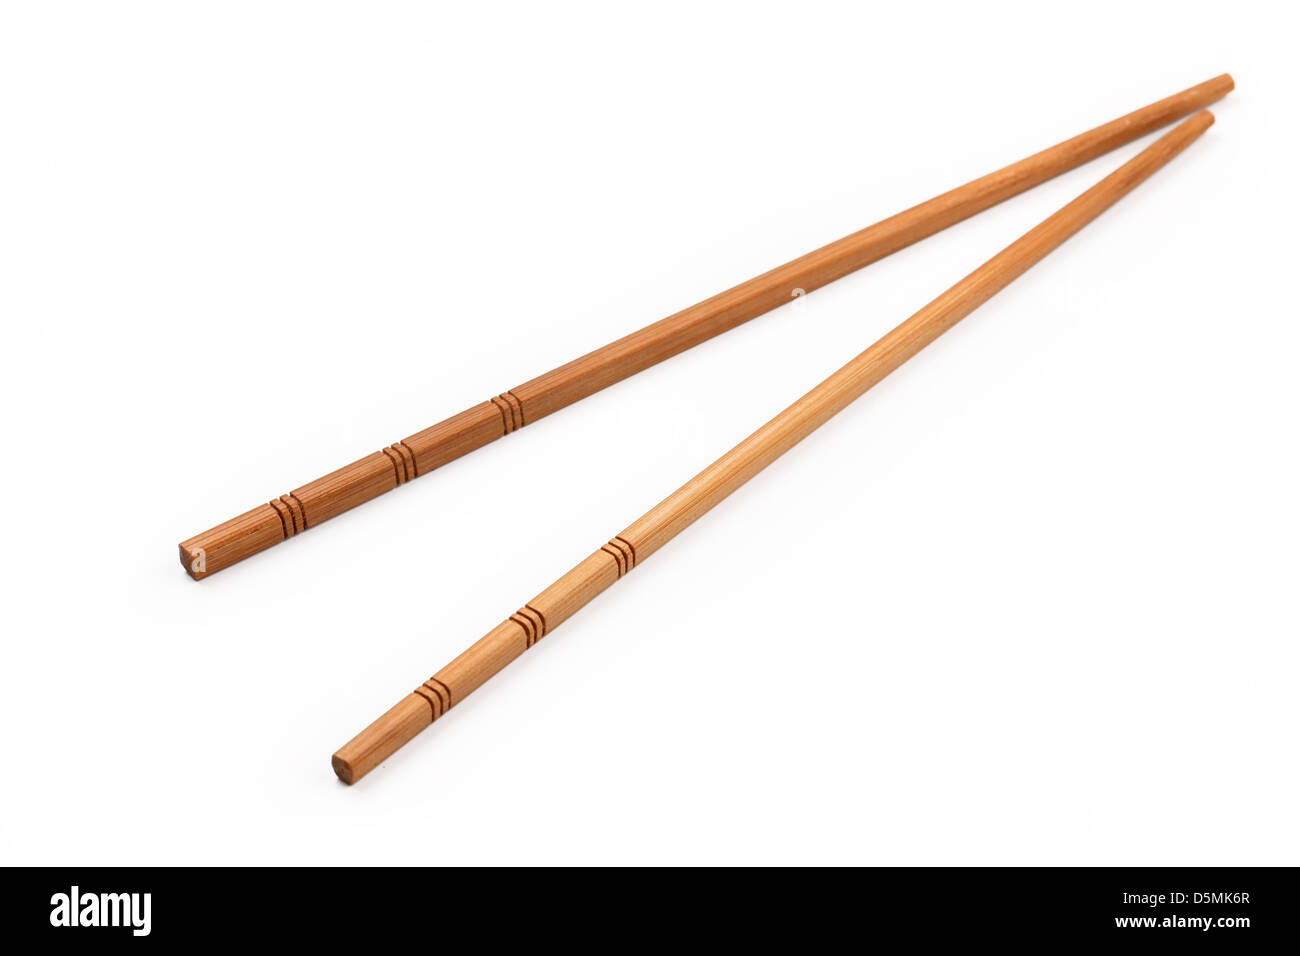 Wooden chopsticks, isolated on white background. Stock Photo